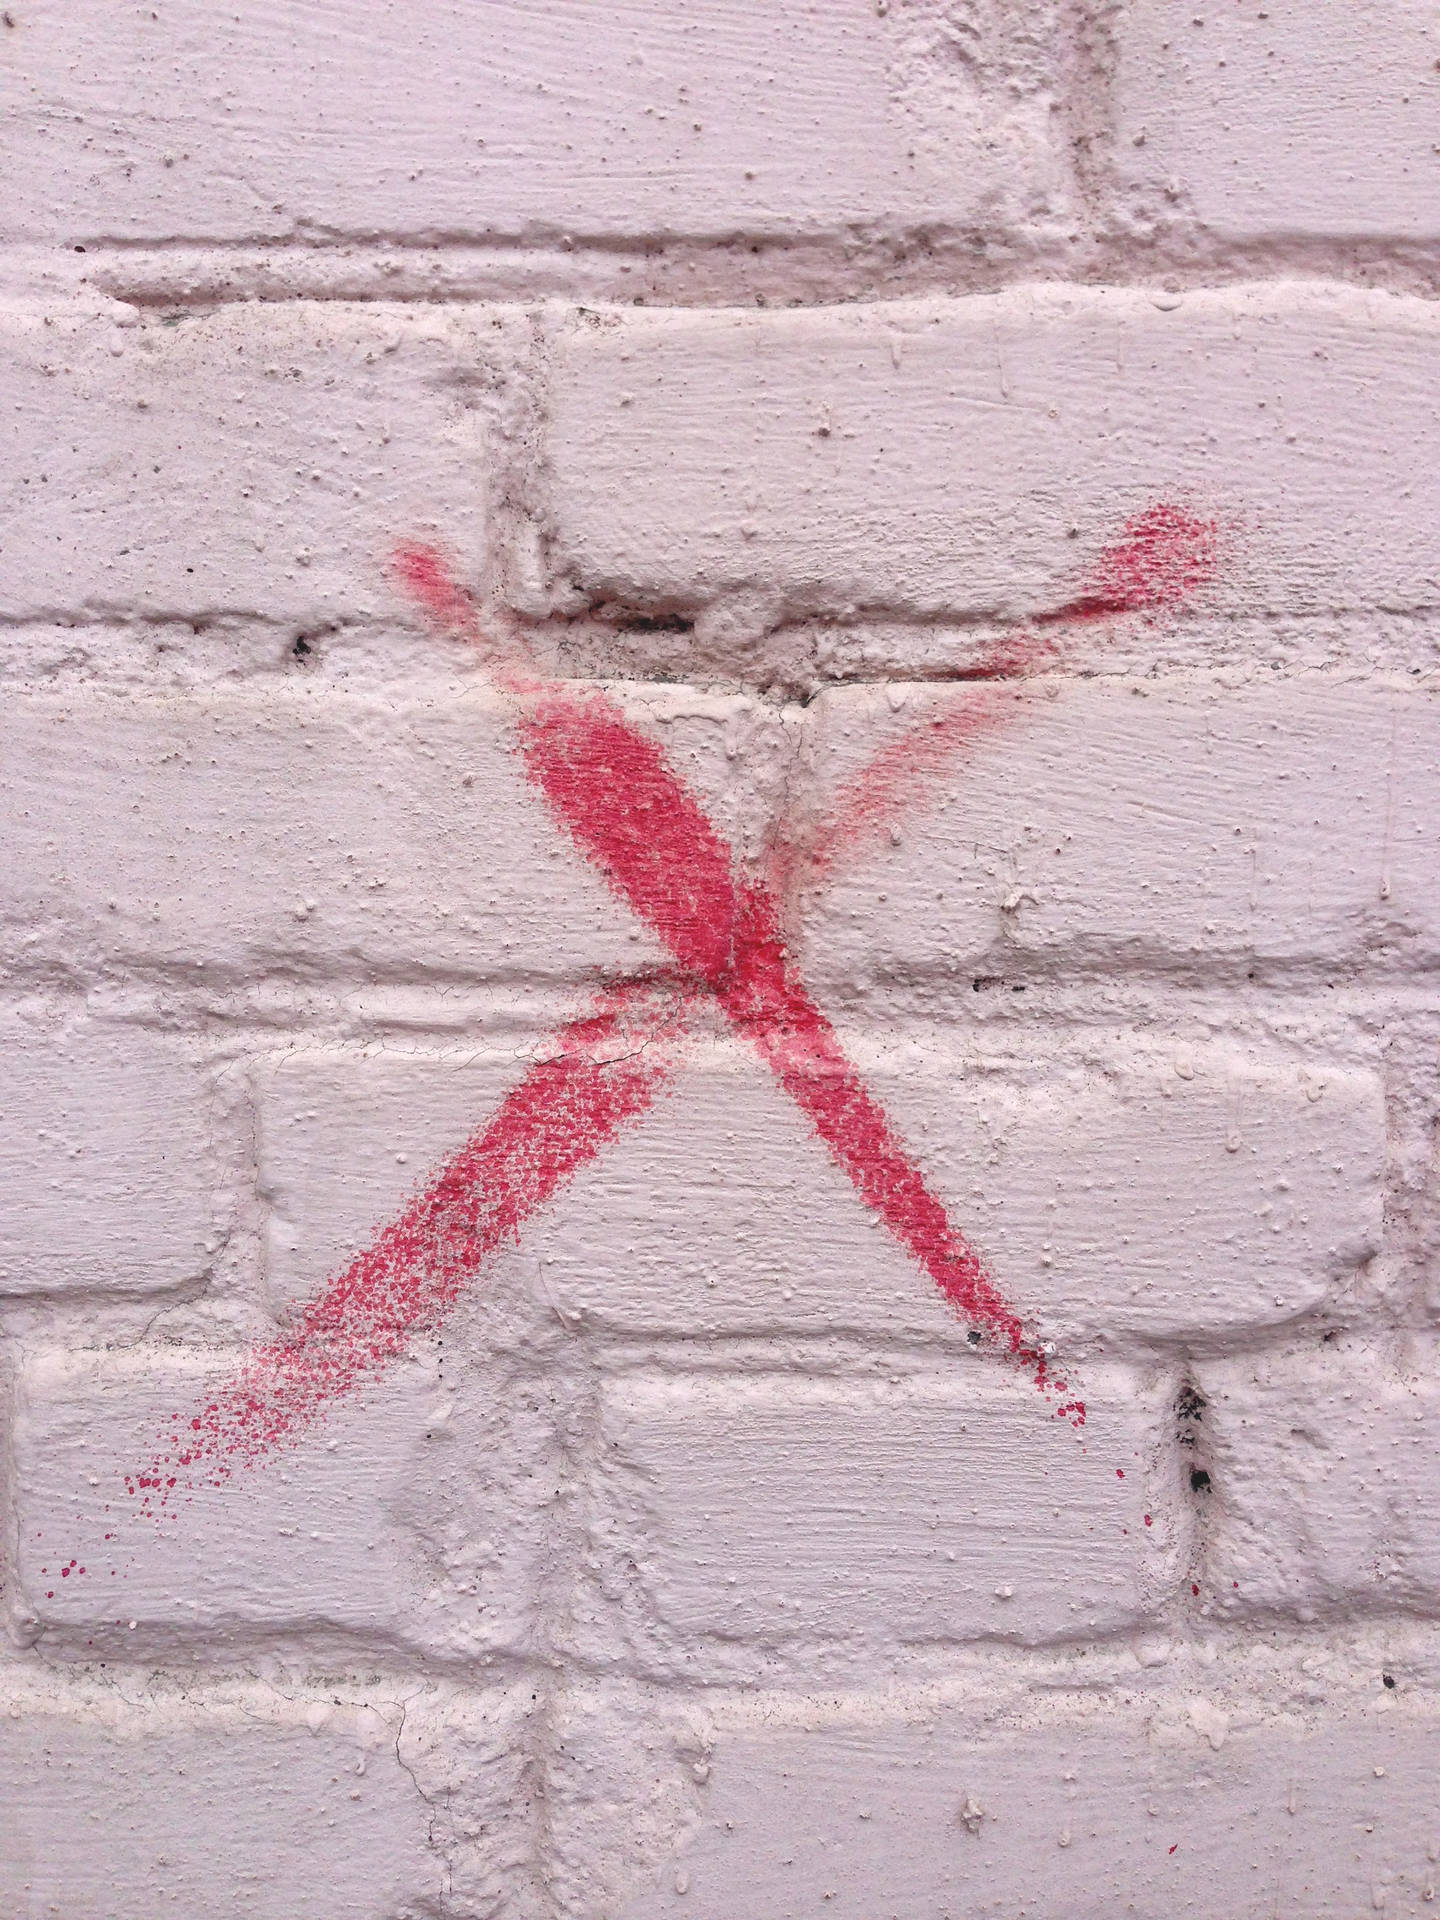 Red X Sign Graffiti